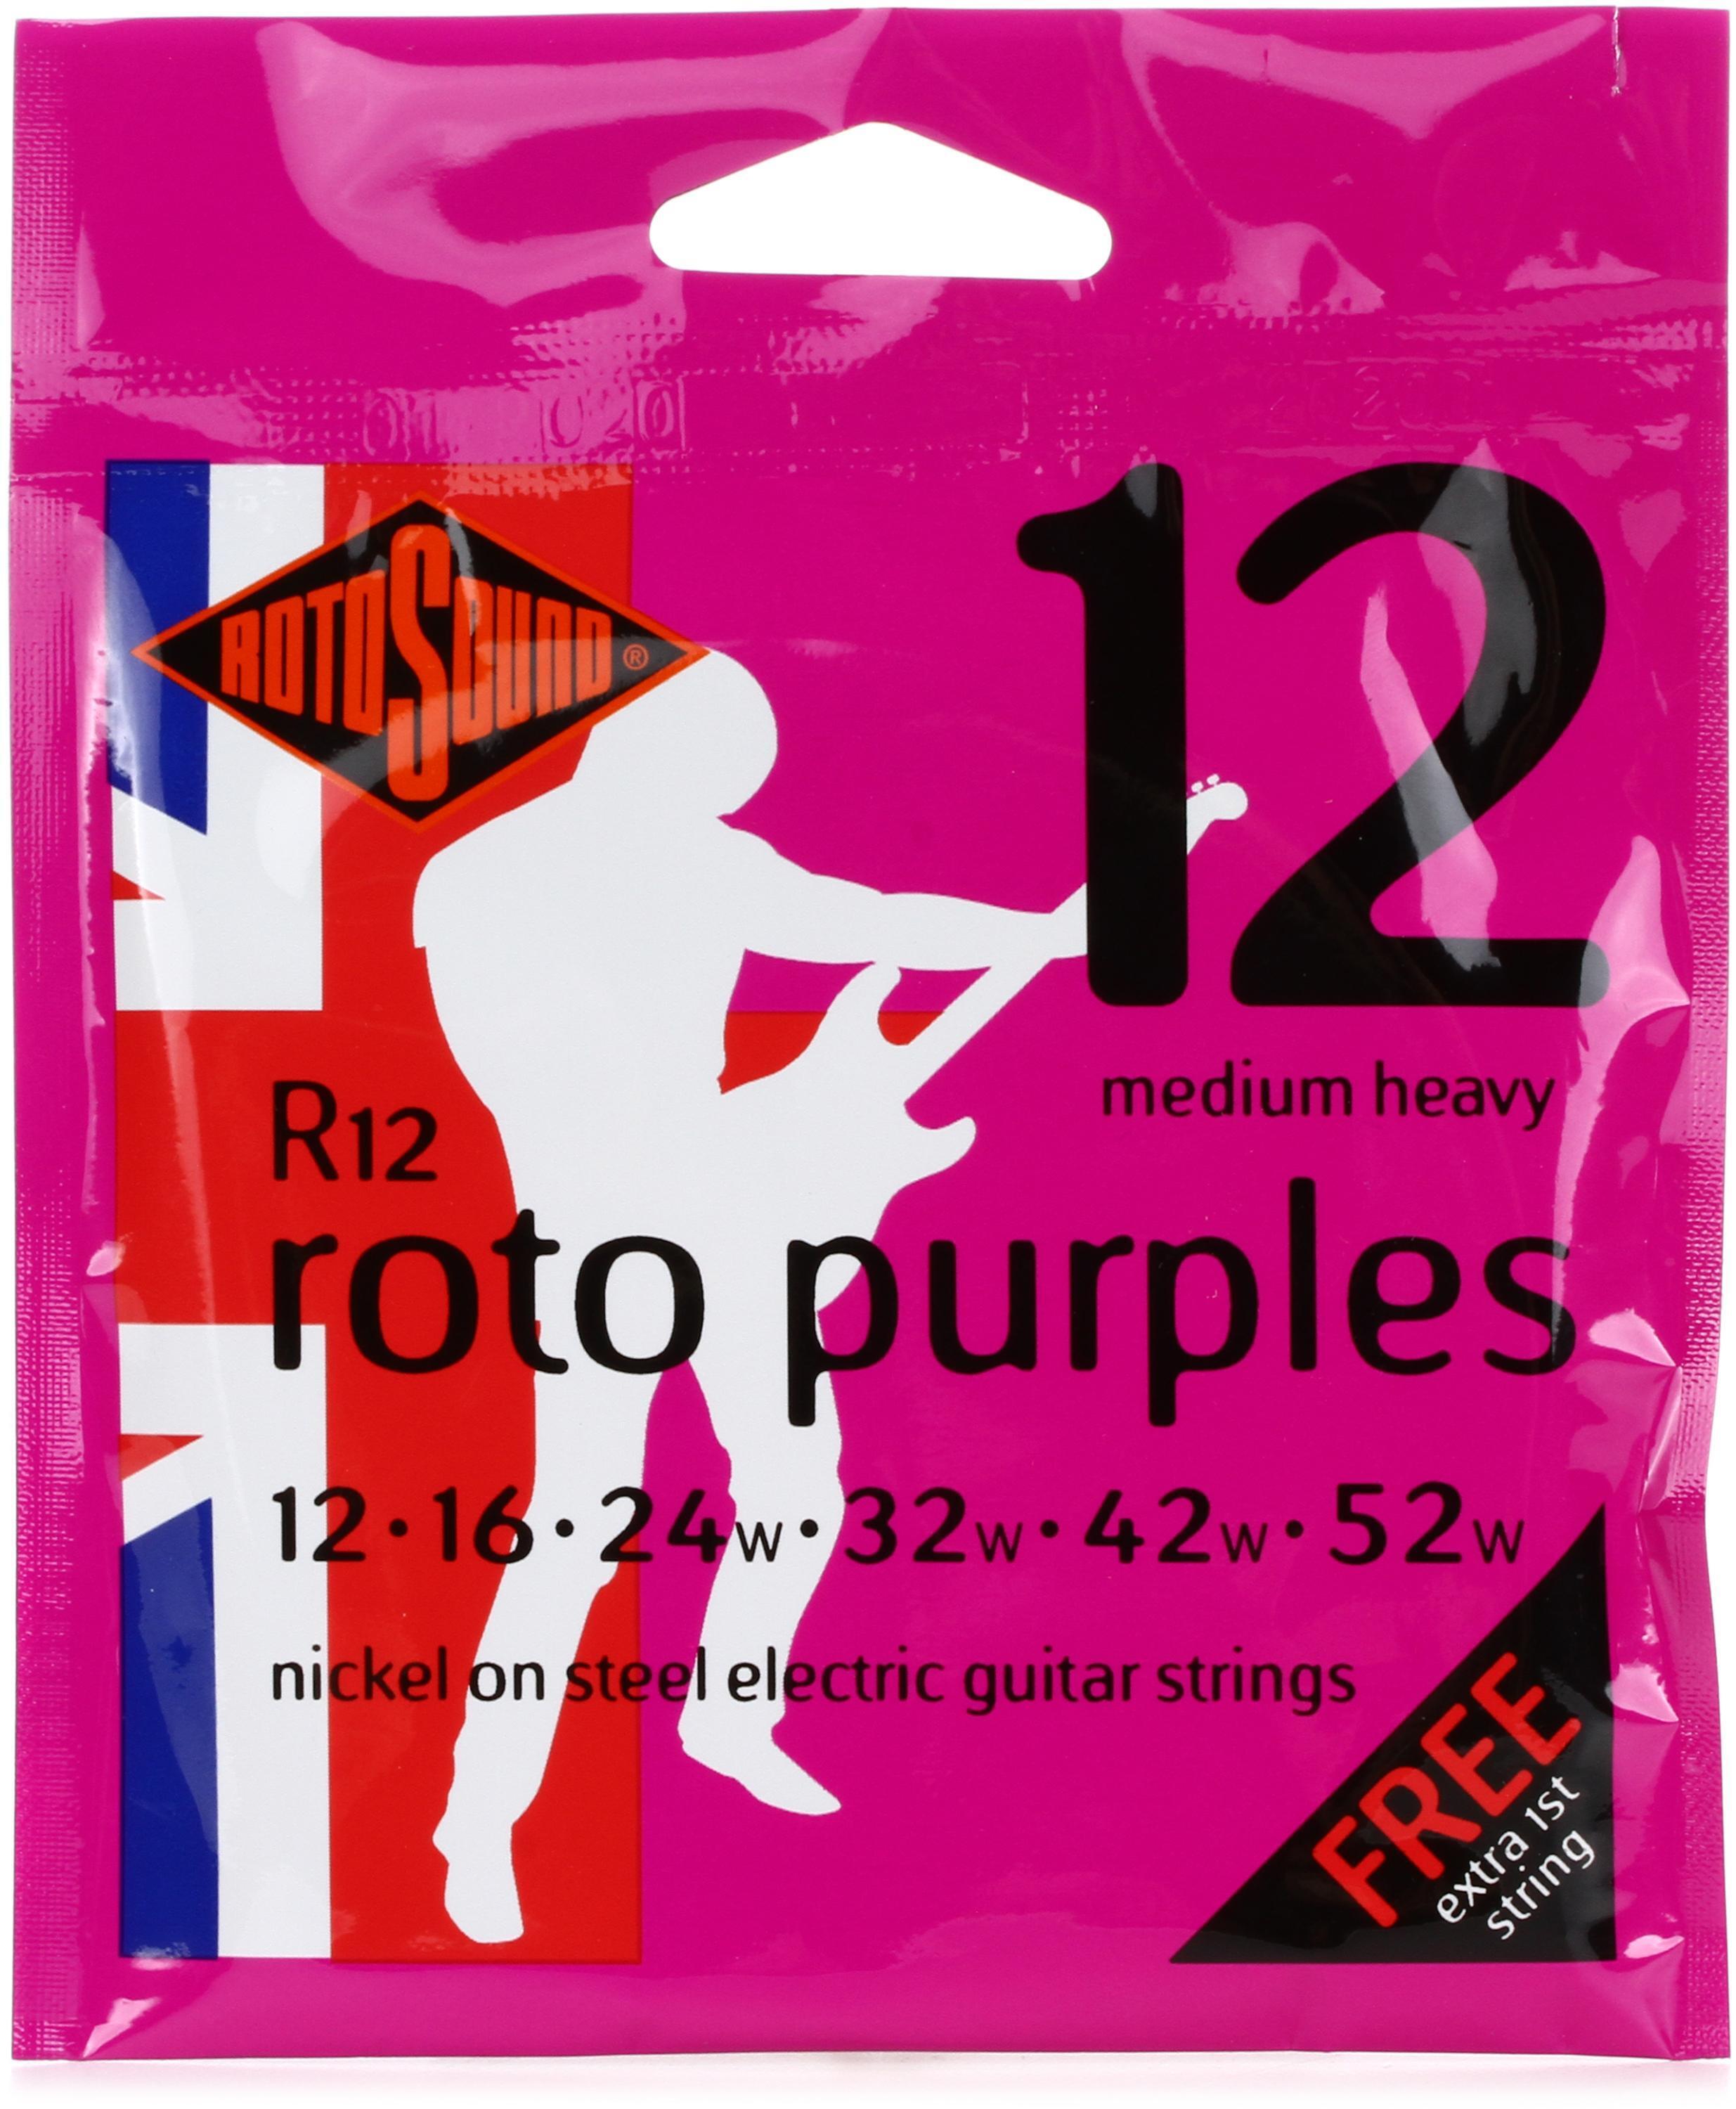 Rotosound R12 Roto Purples Nickel On Steel Electric Guitar Strings -  .012-.052 Medium Heavy